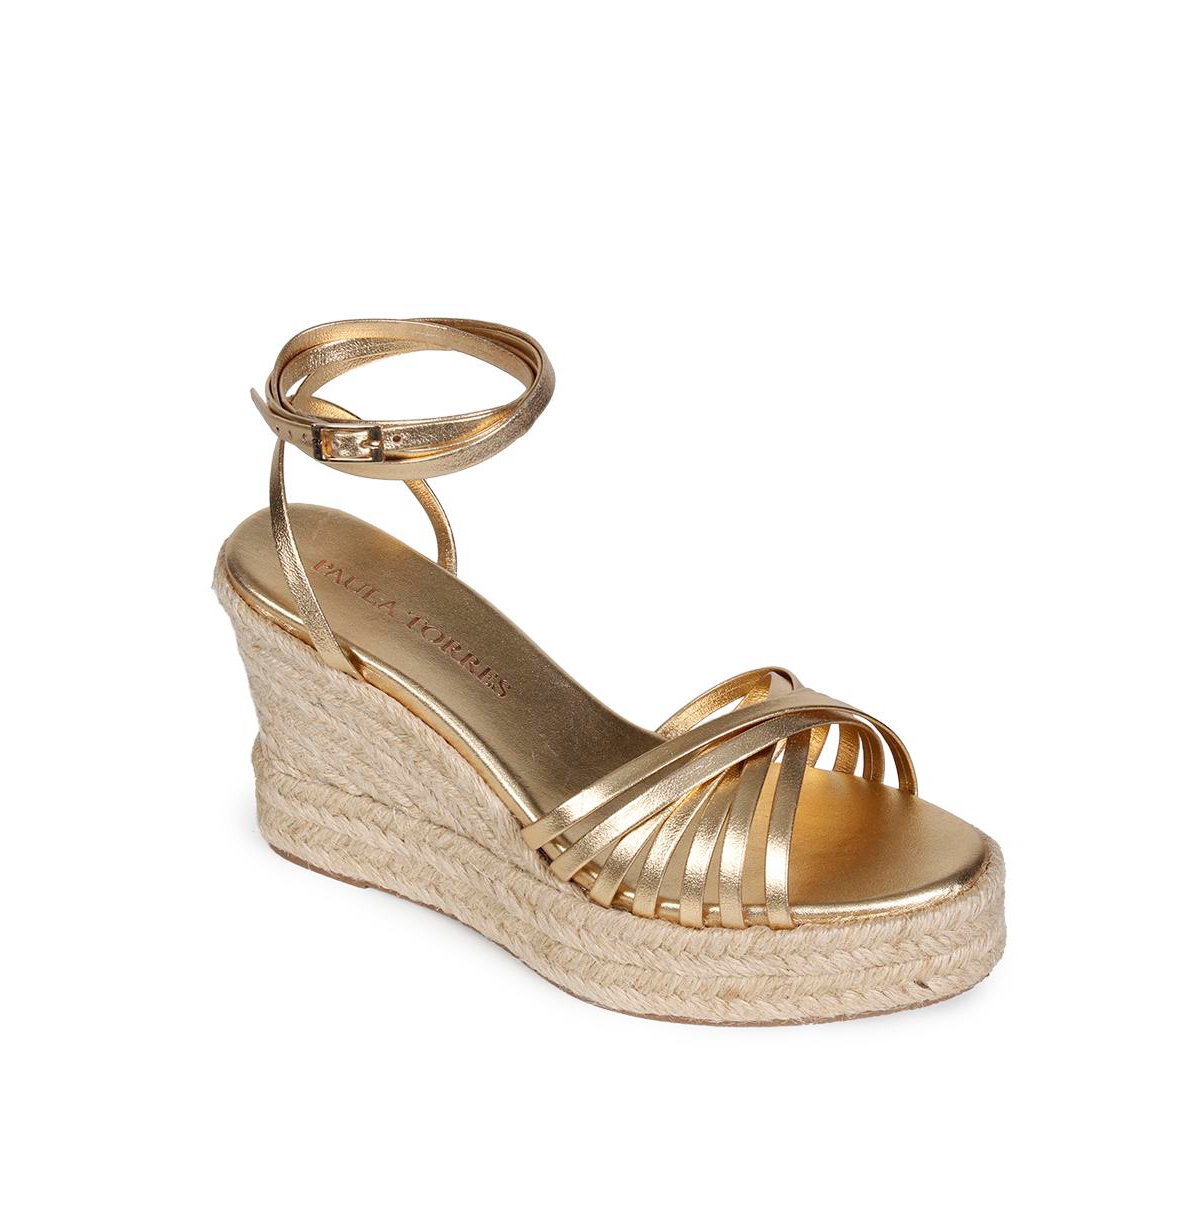 Shoes Women's Alicia Platform Espadrille Wedge Sandals - Gold